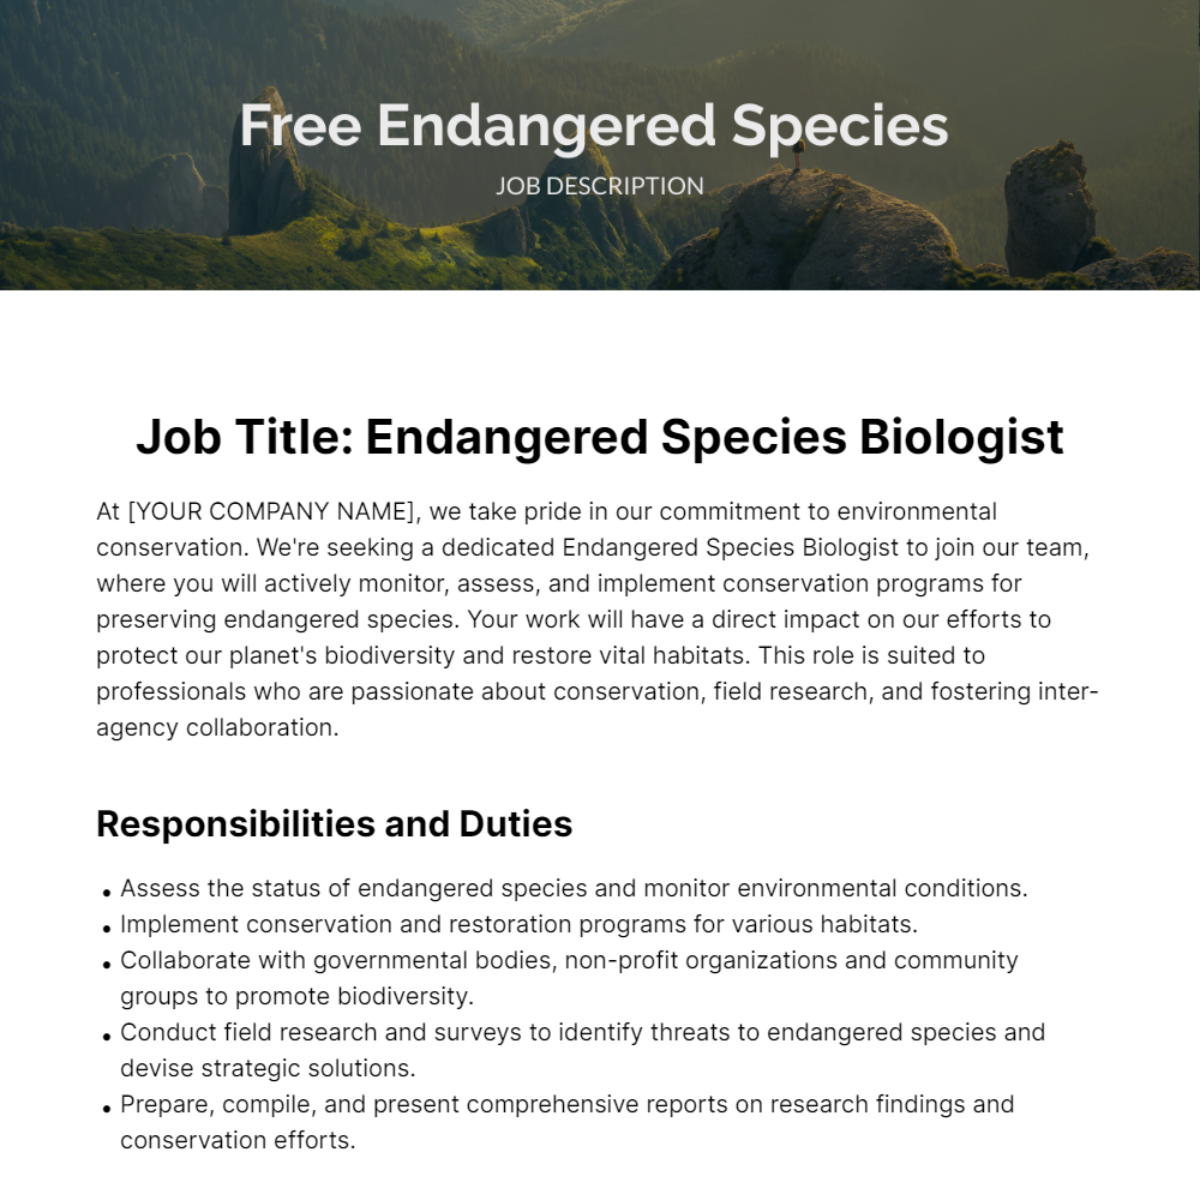 Free Endangered Species Job Description Template